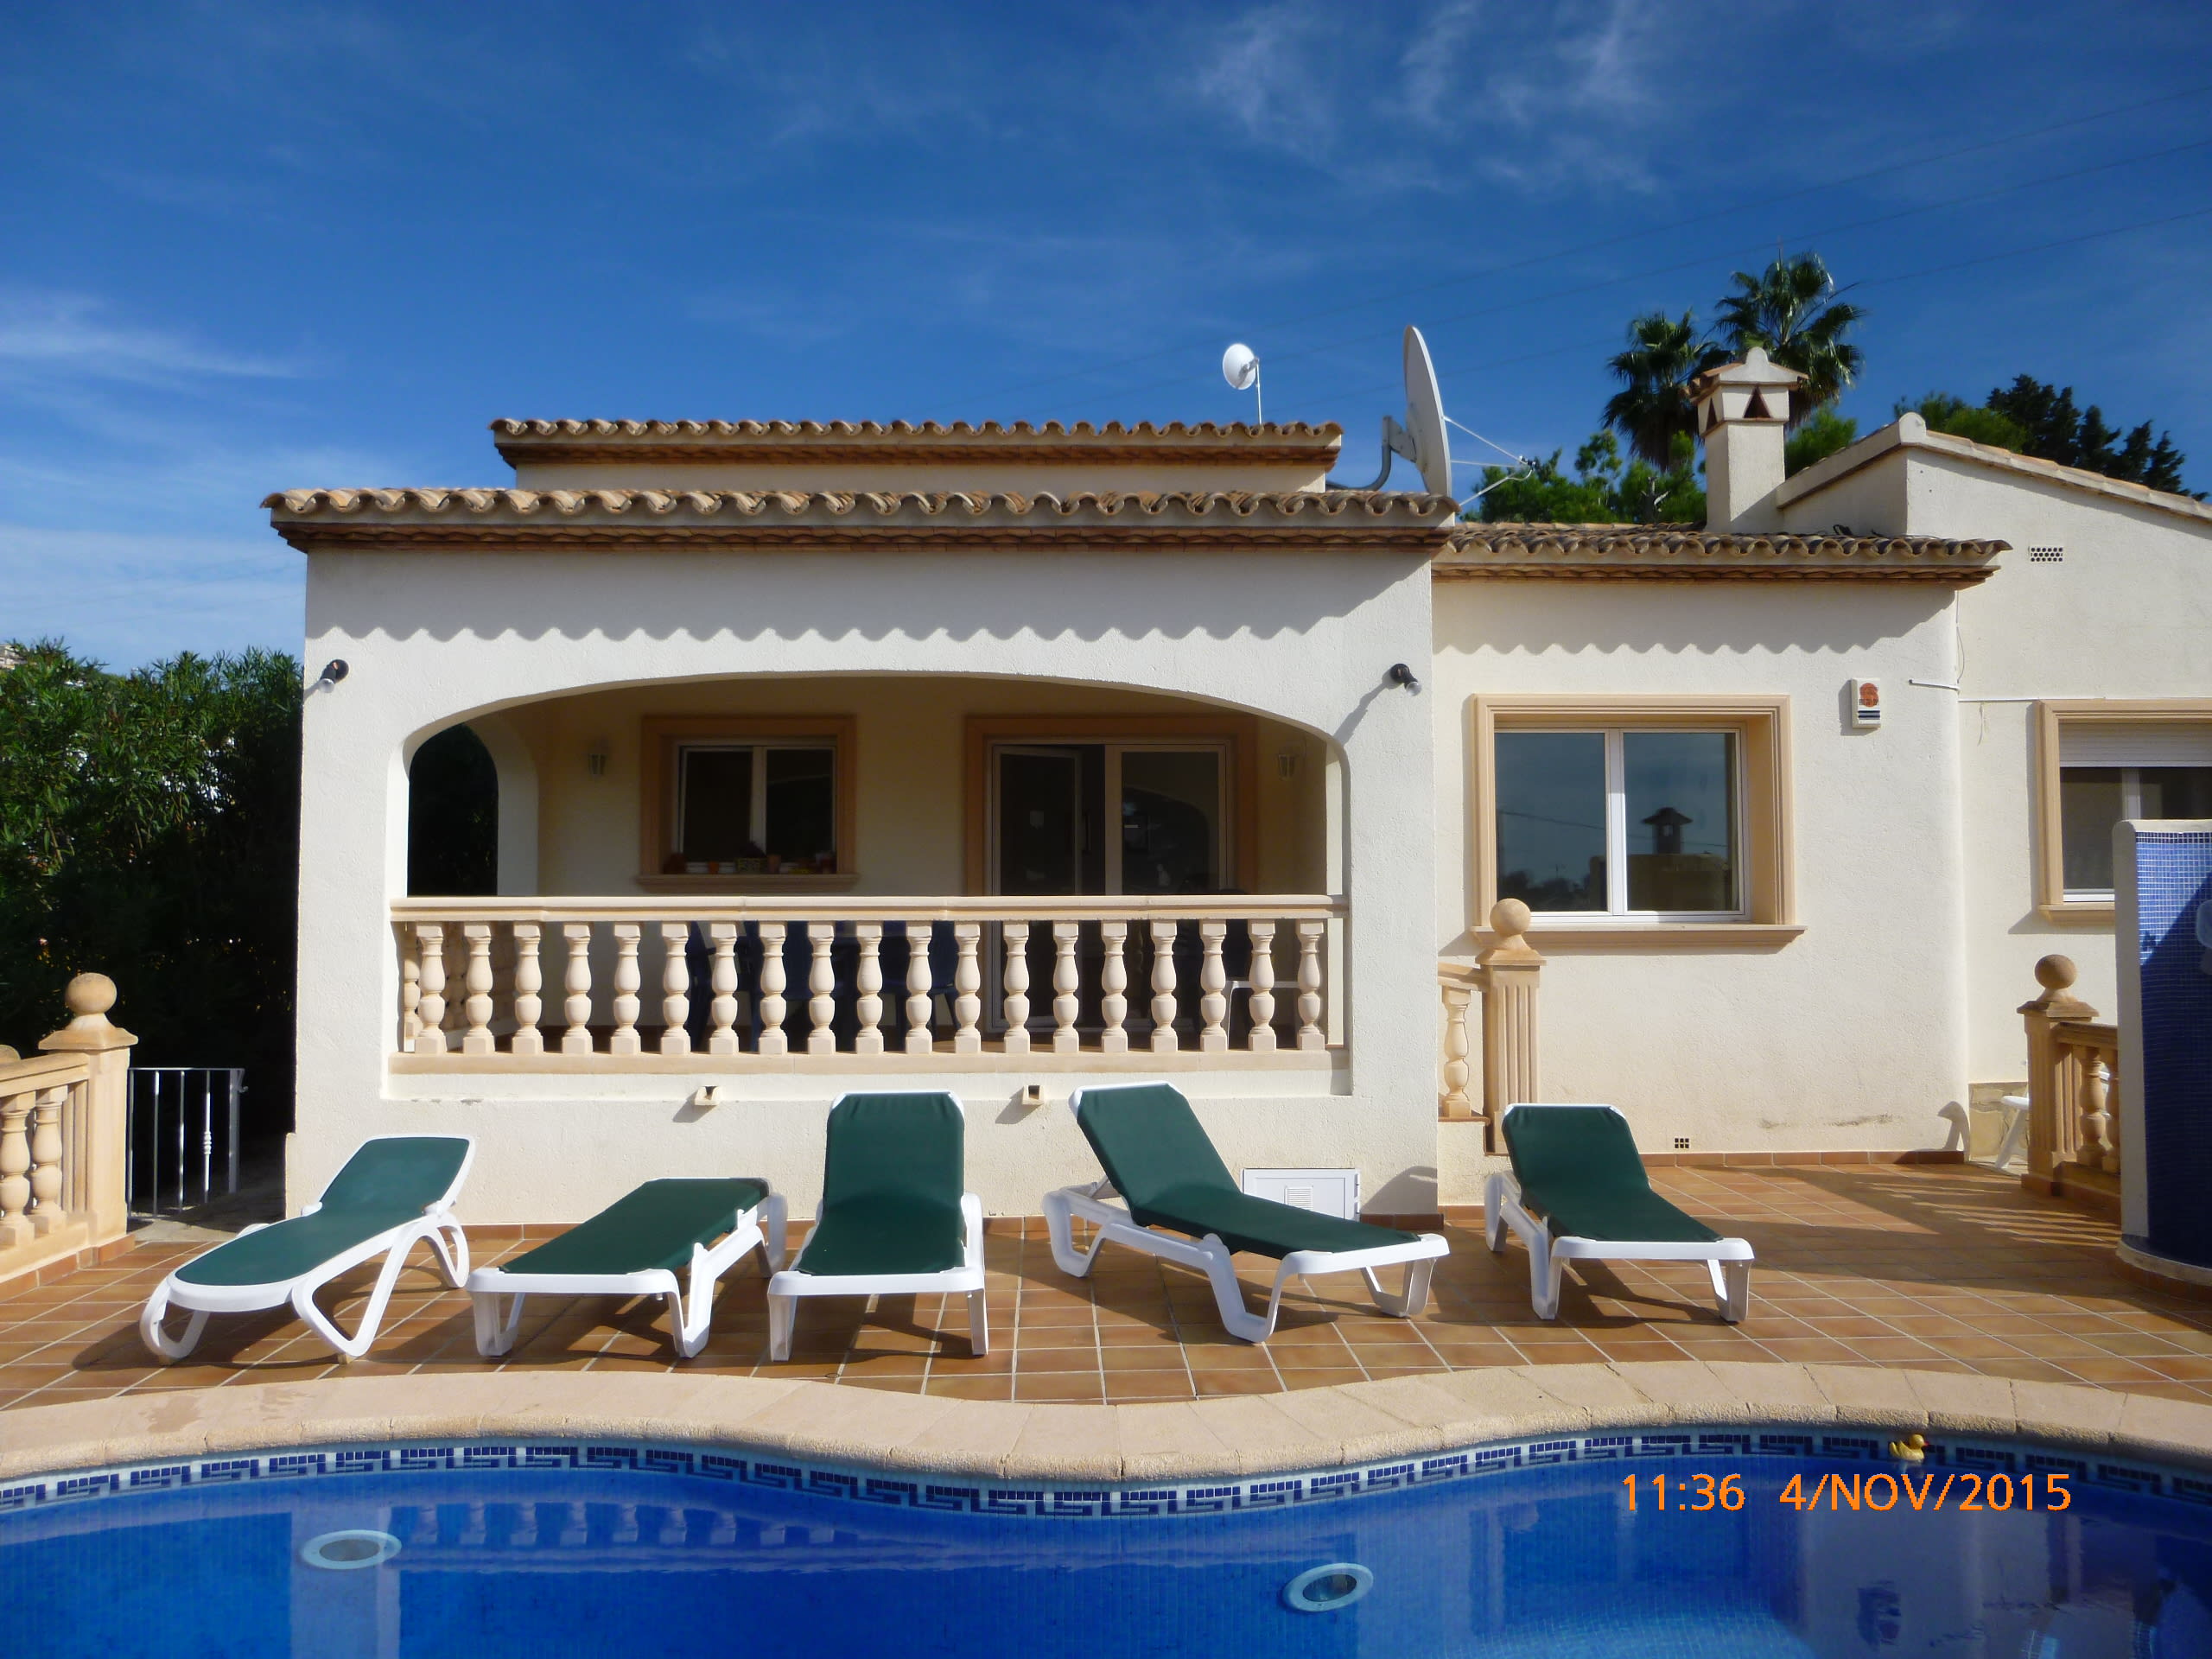 Villa Catalina Holiday Rental In Calpe, Spain